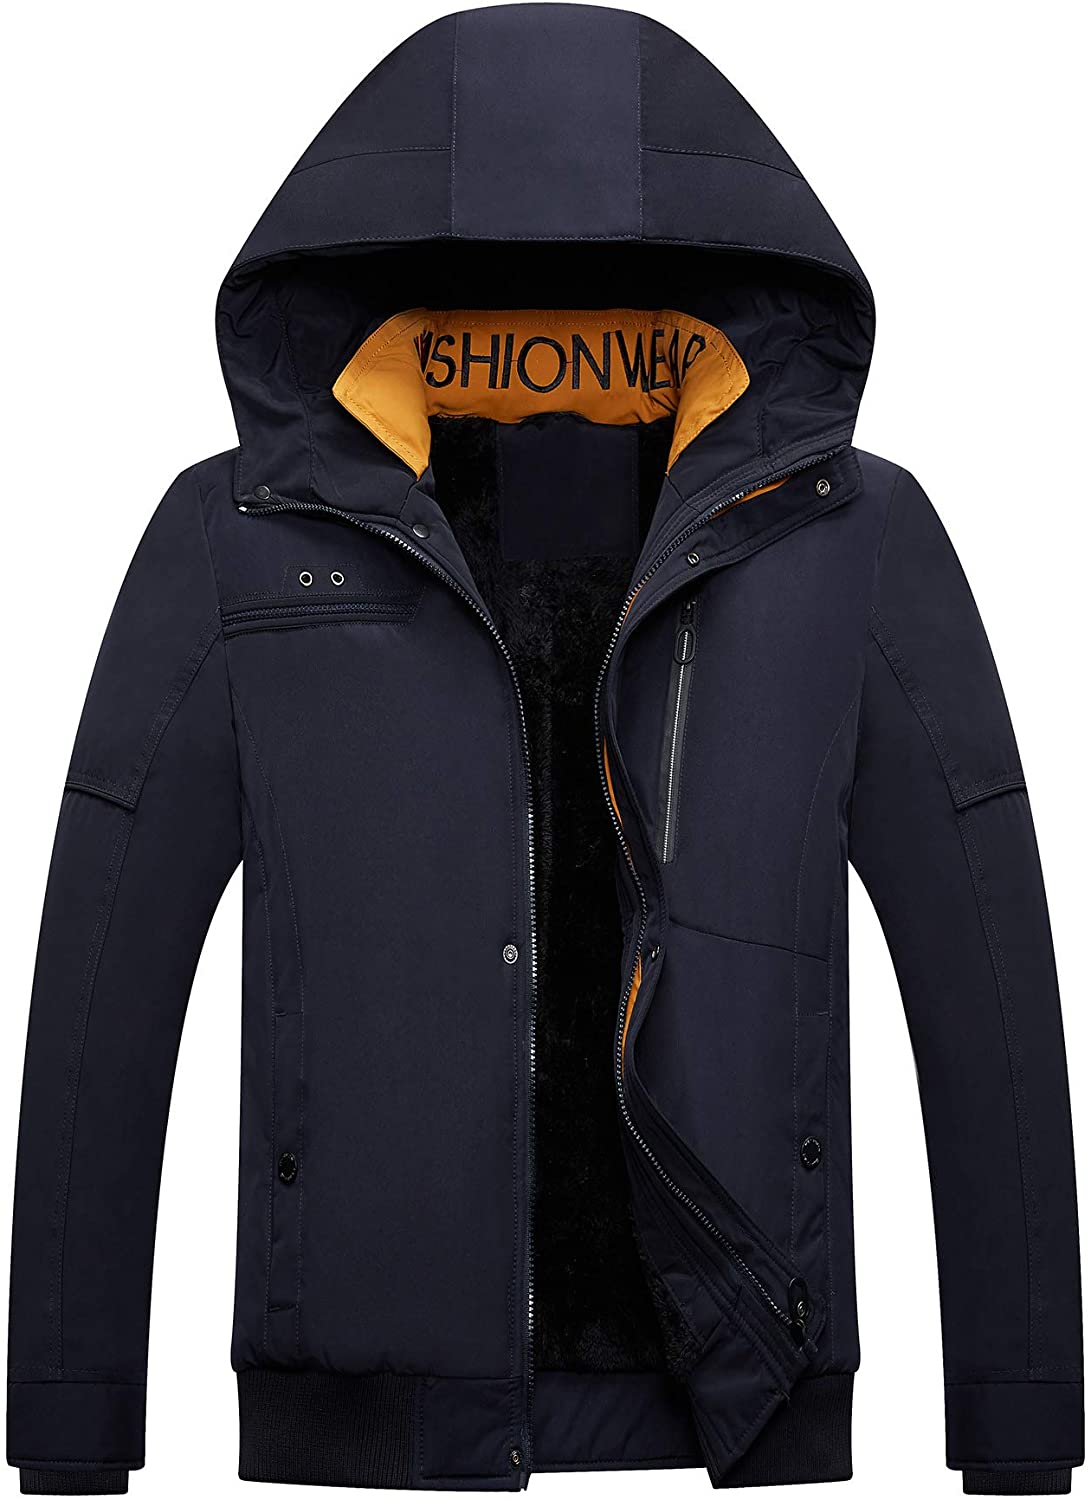 FTIMILD Men's Mountain Waterproof Ski Jacket Winter Windbreaker Windproof Warm Snow Coat Hooded Raincoat 